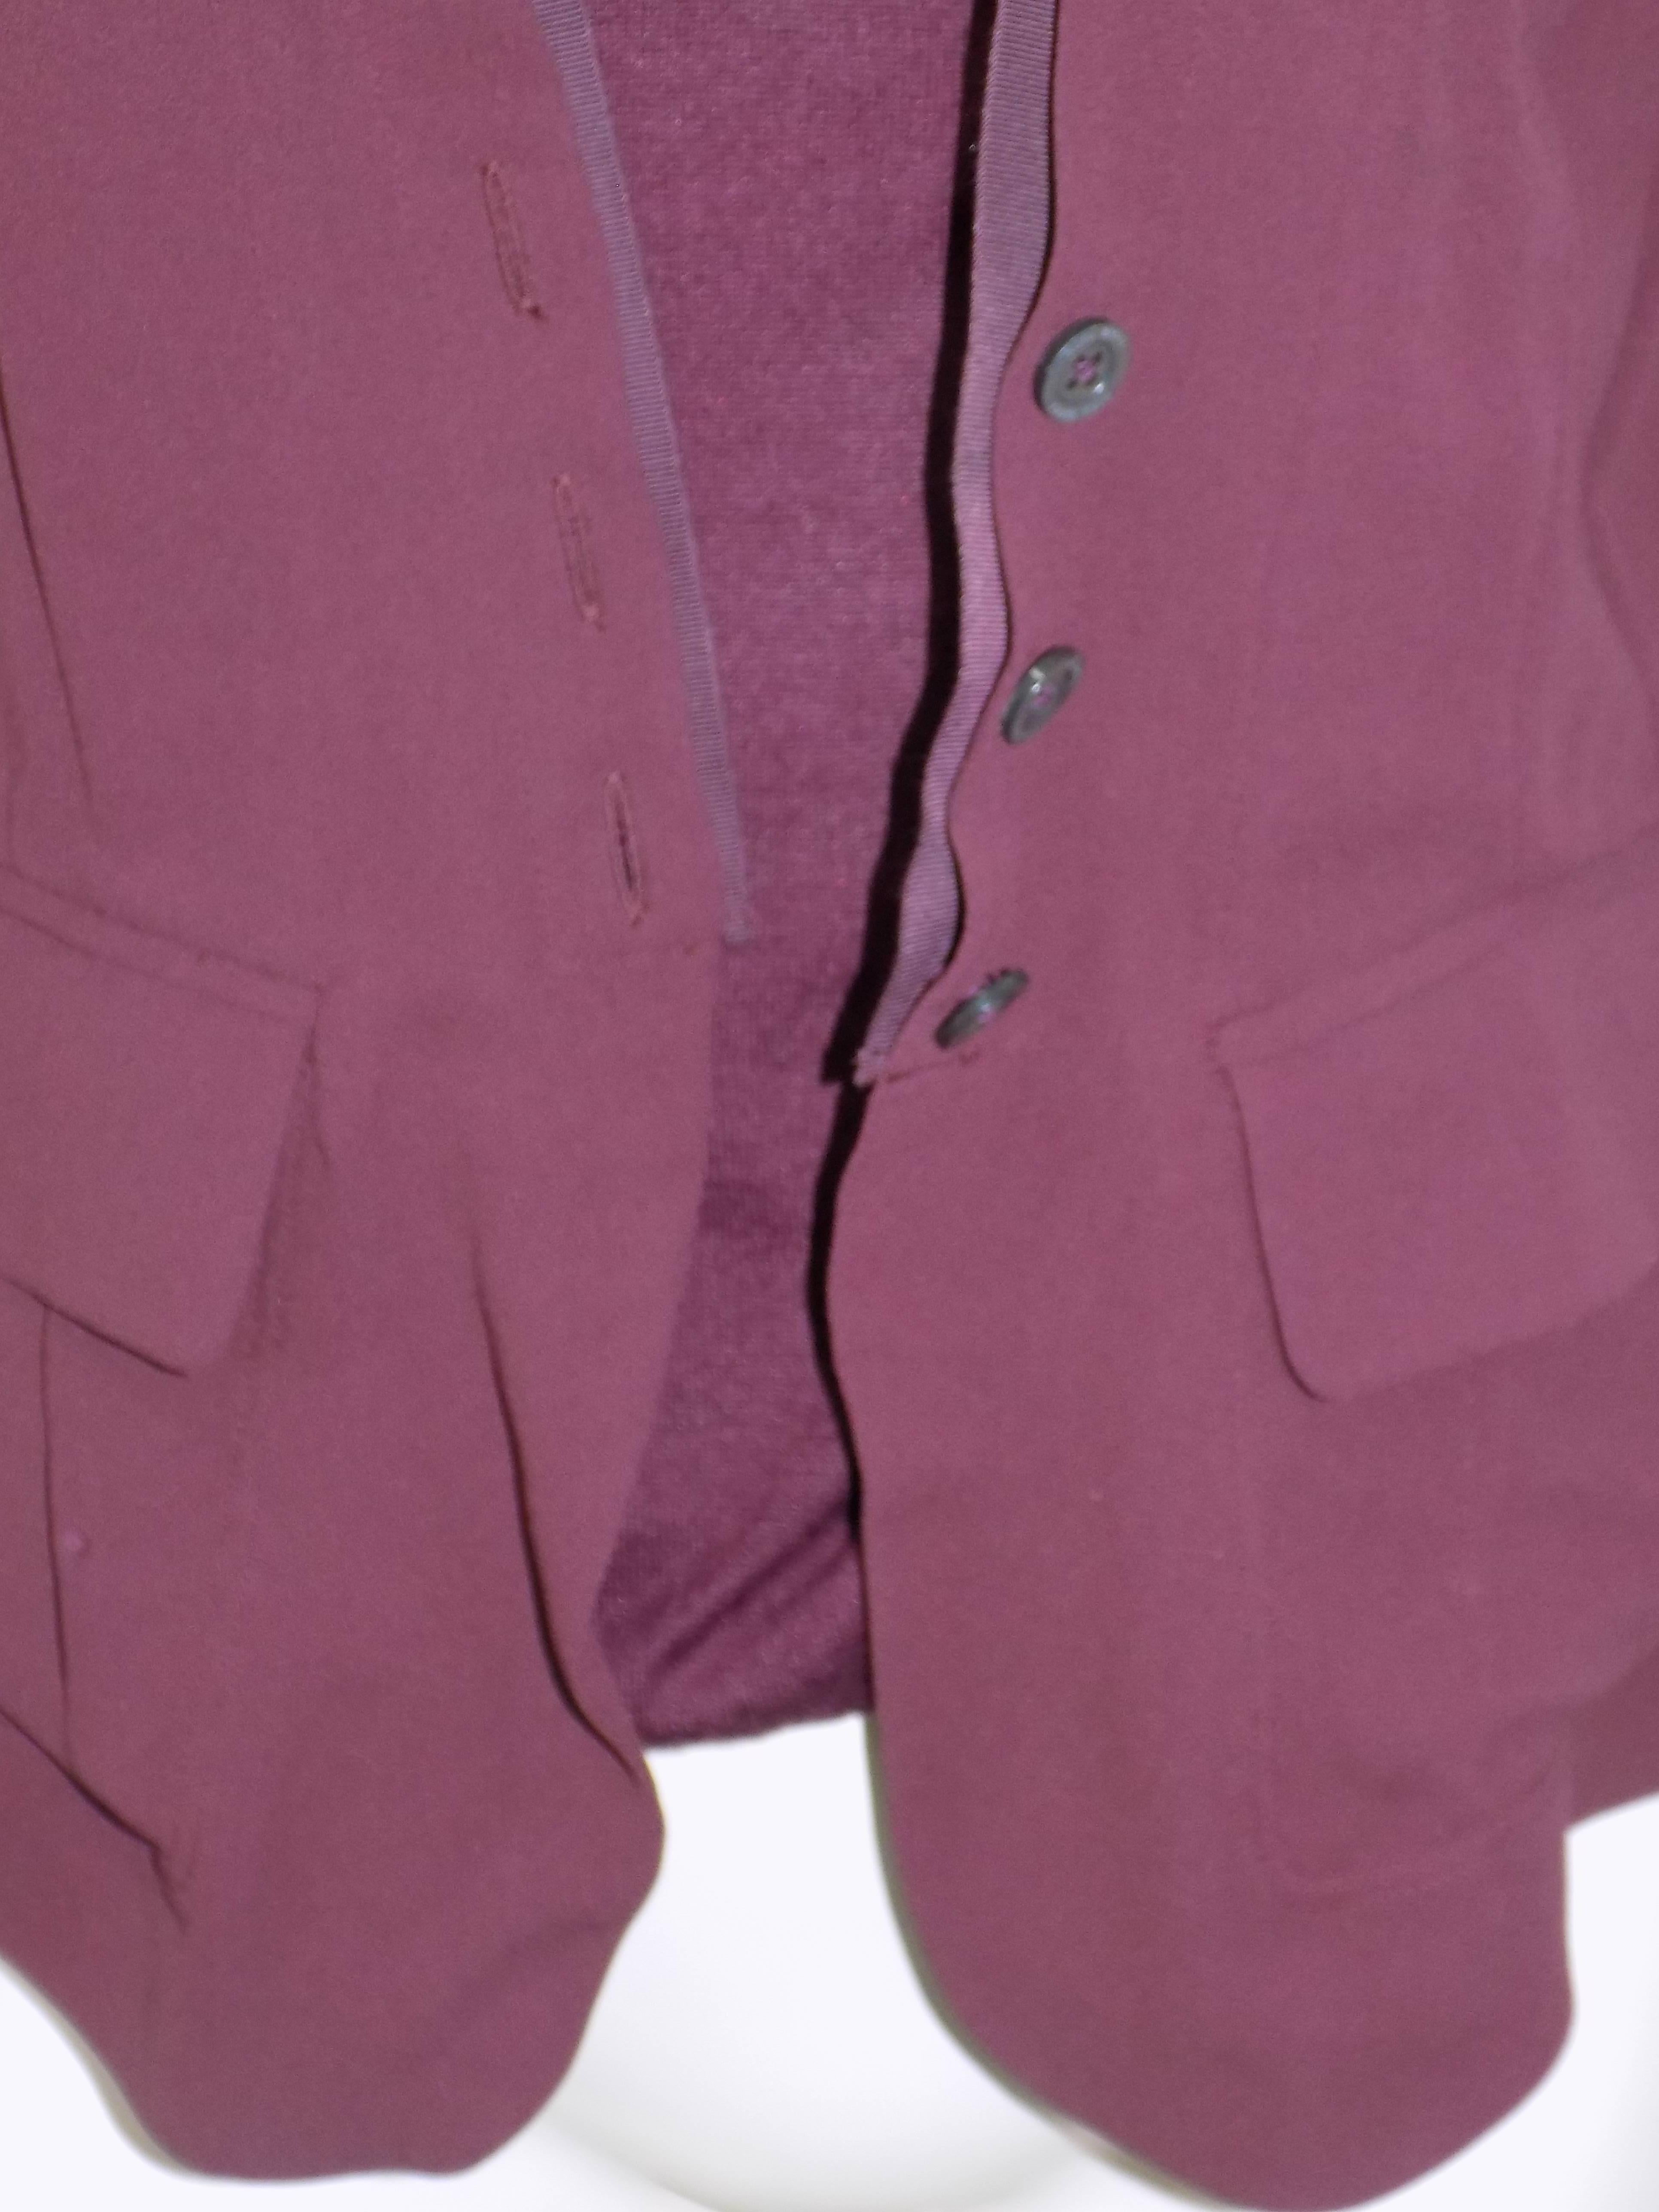 Black Nina Ricci silk and cashmere sweater set jaket/ top                           